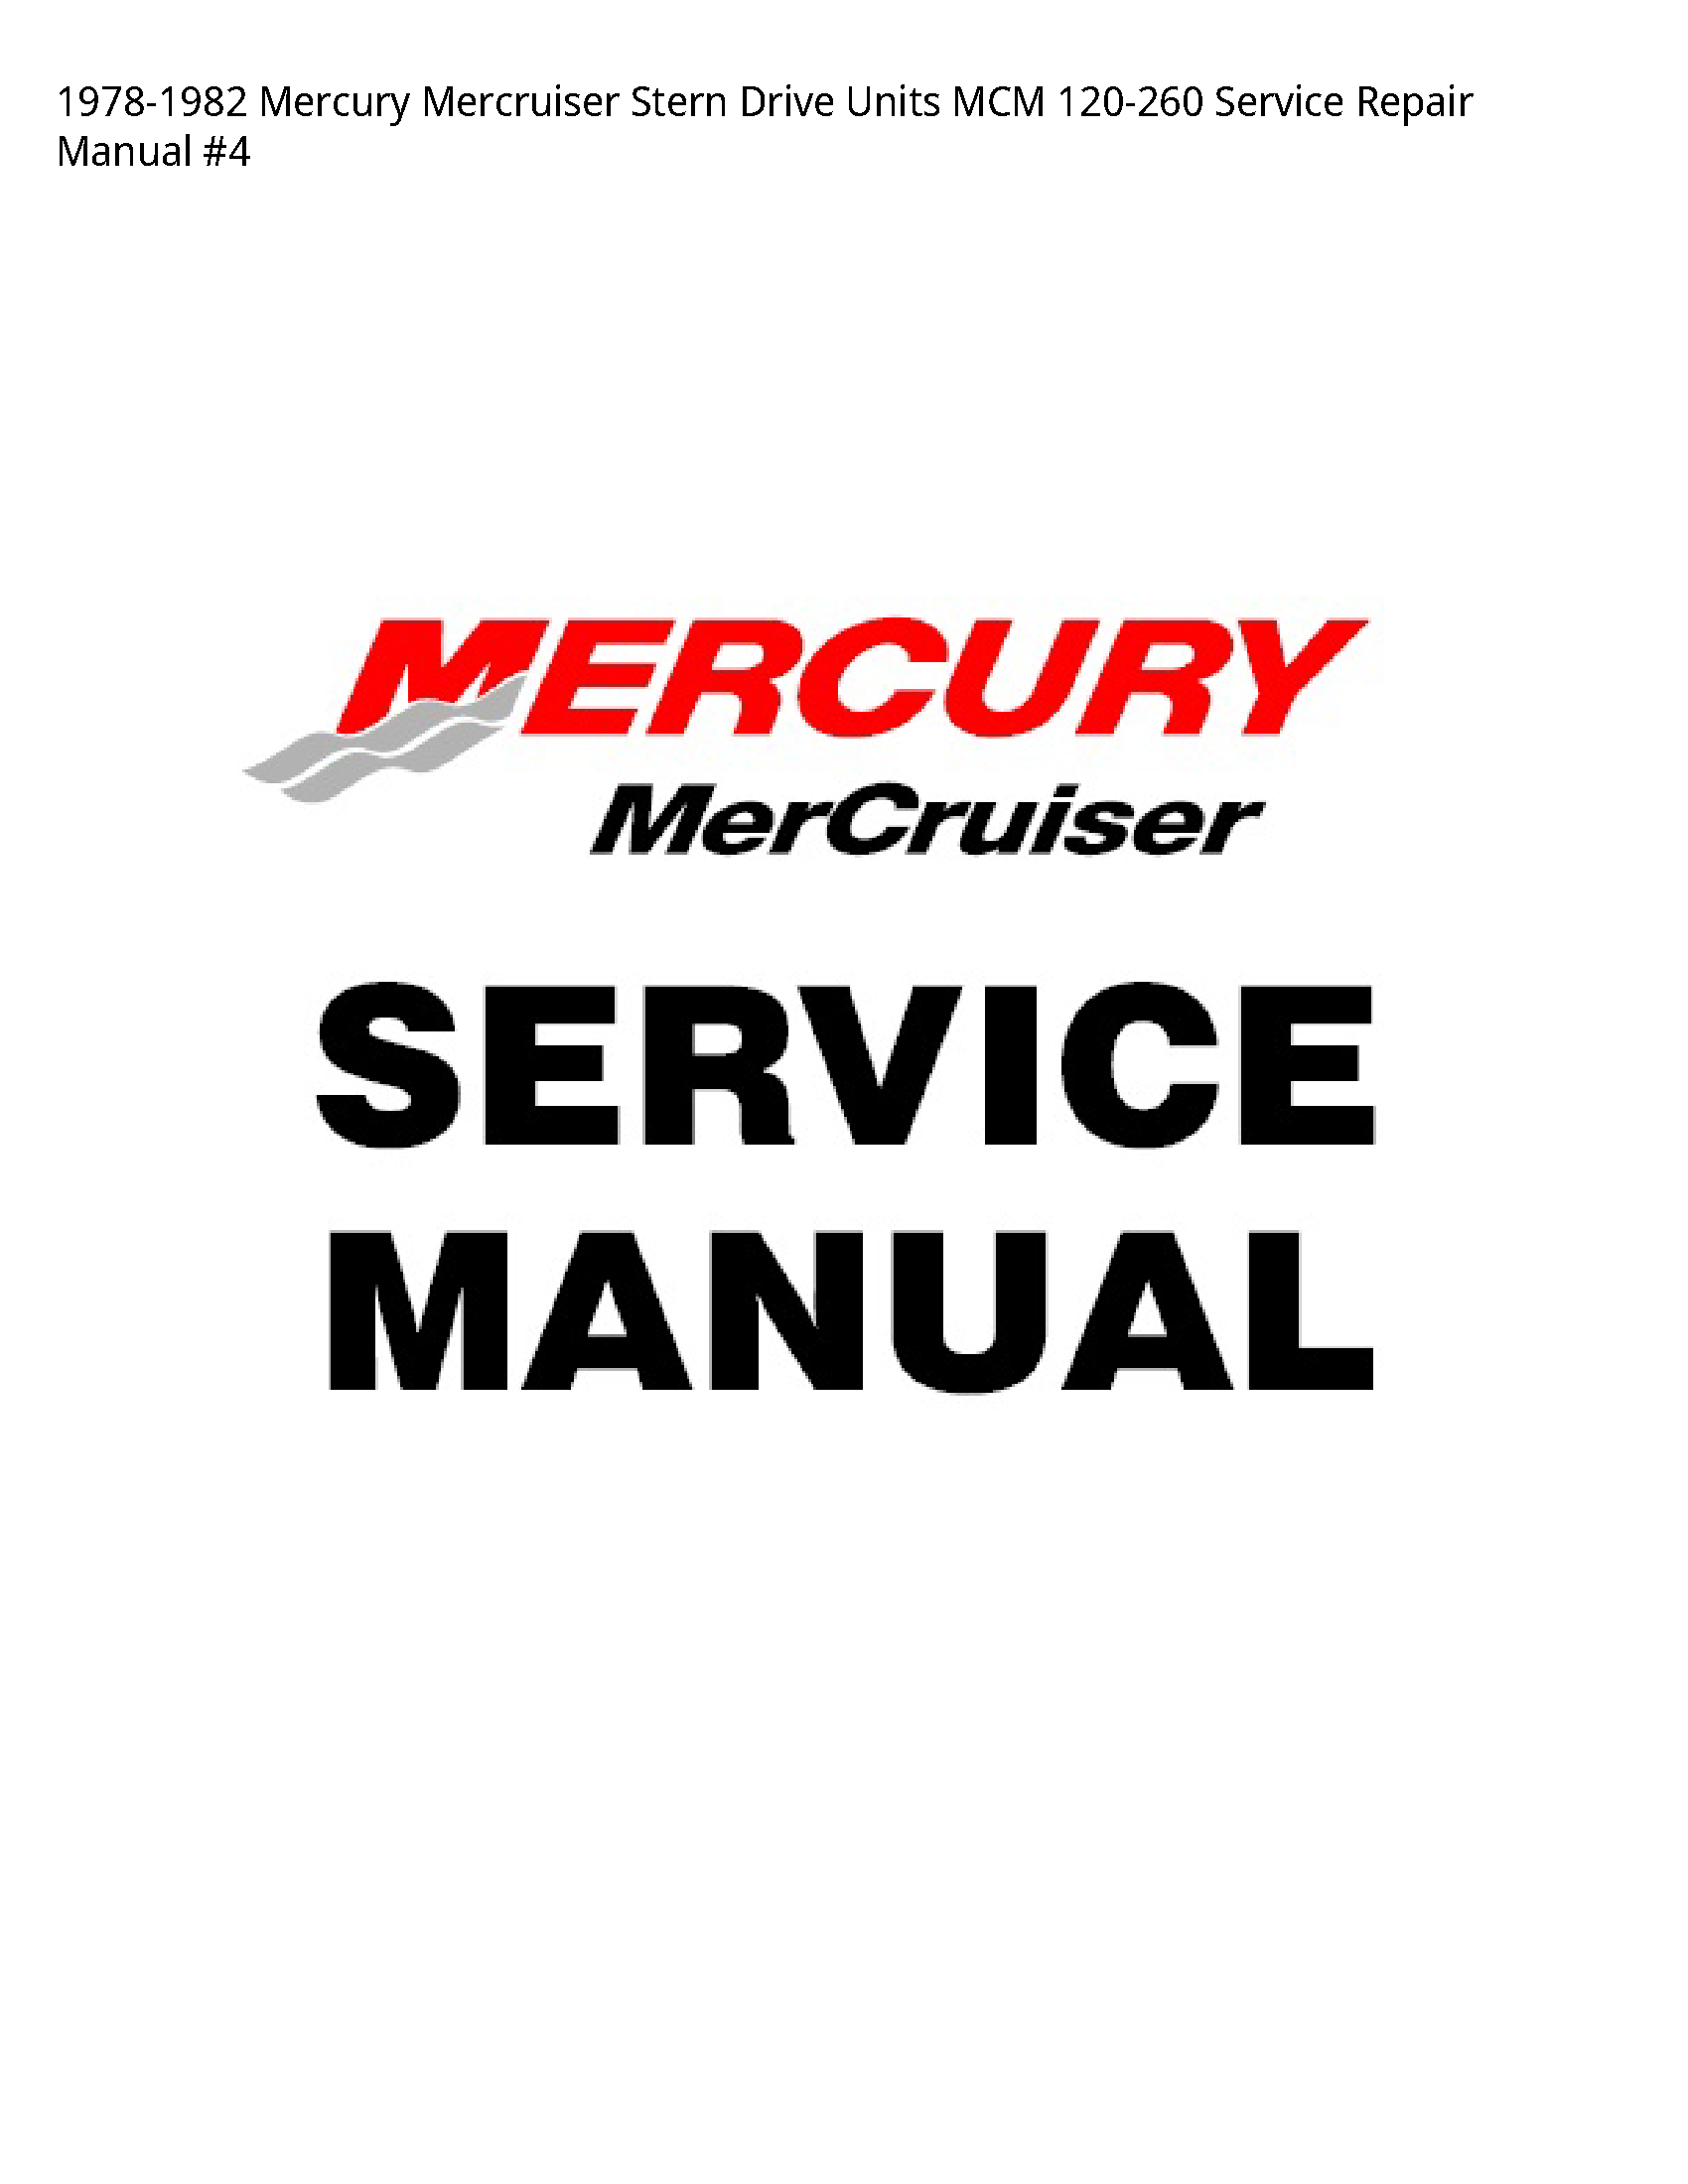 Mercury 120-260 Mercruiser Stern Drive Units MCM manual